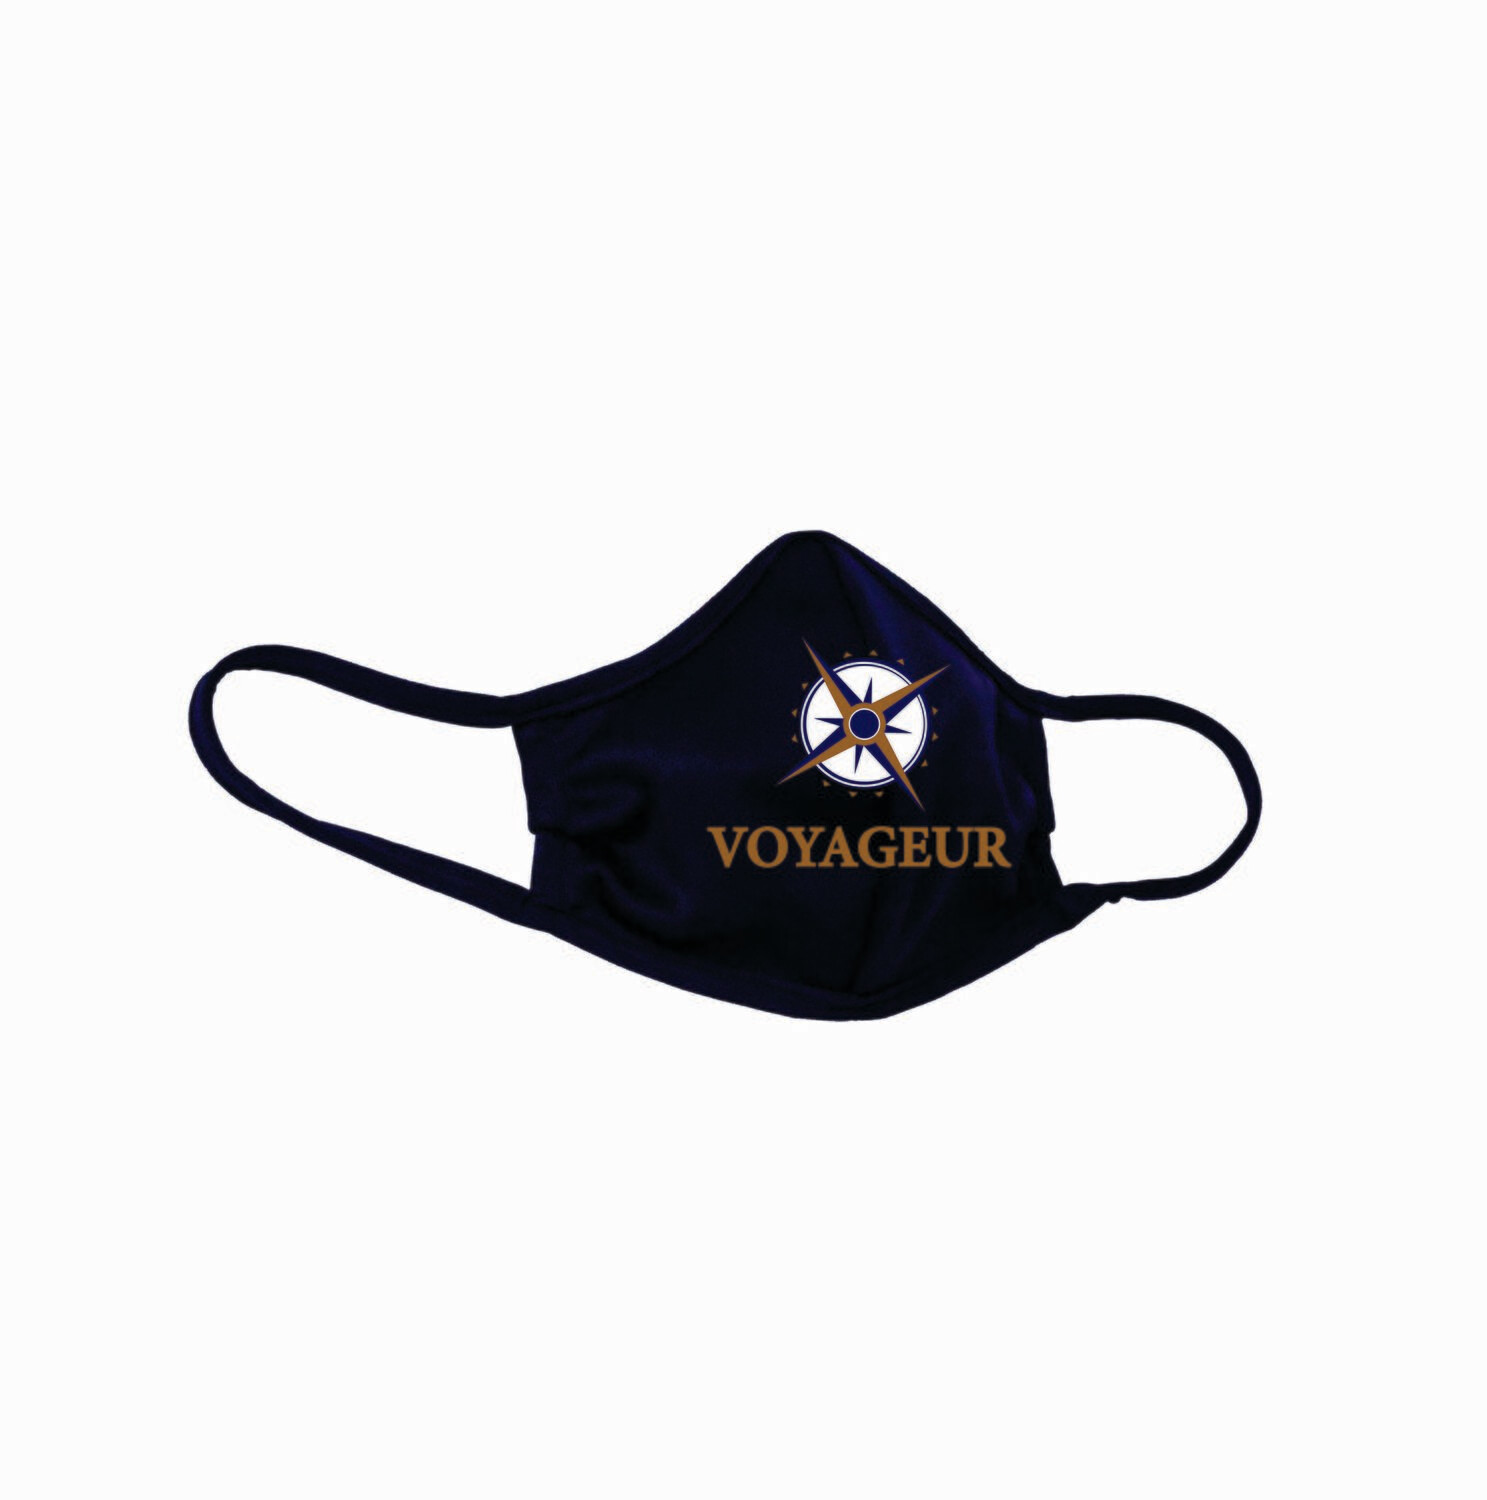 Voyageur Mask